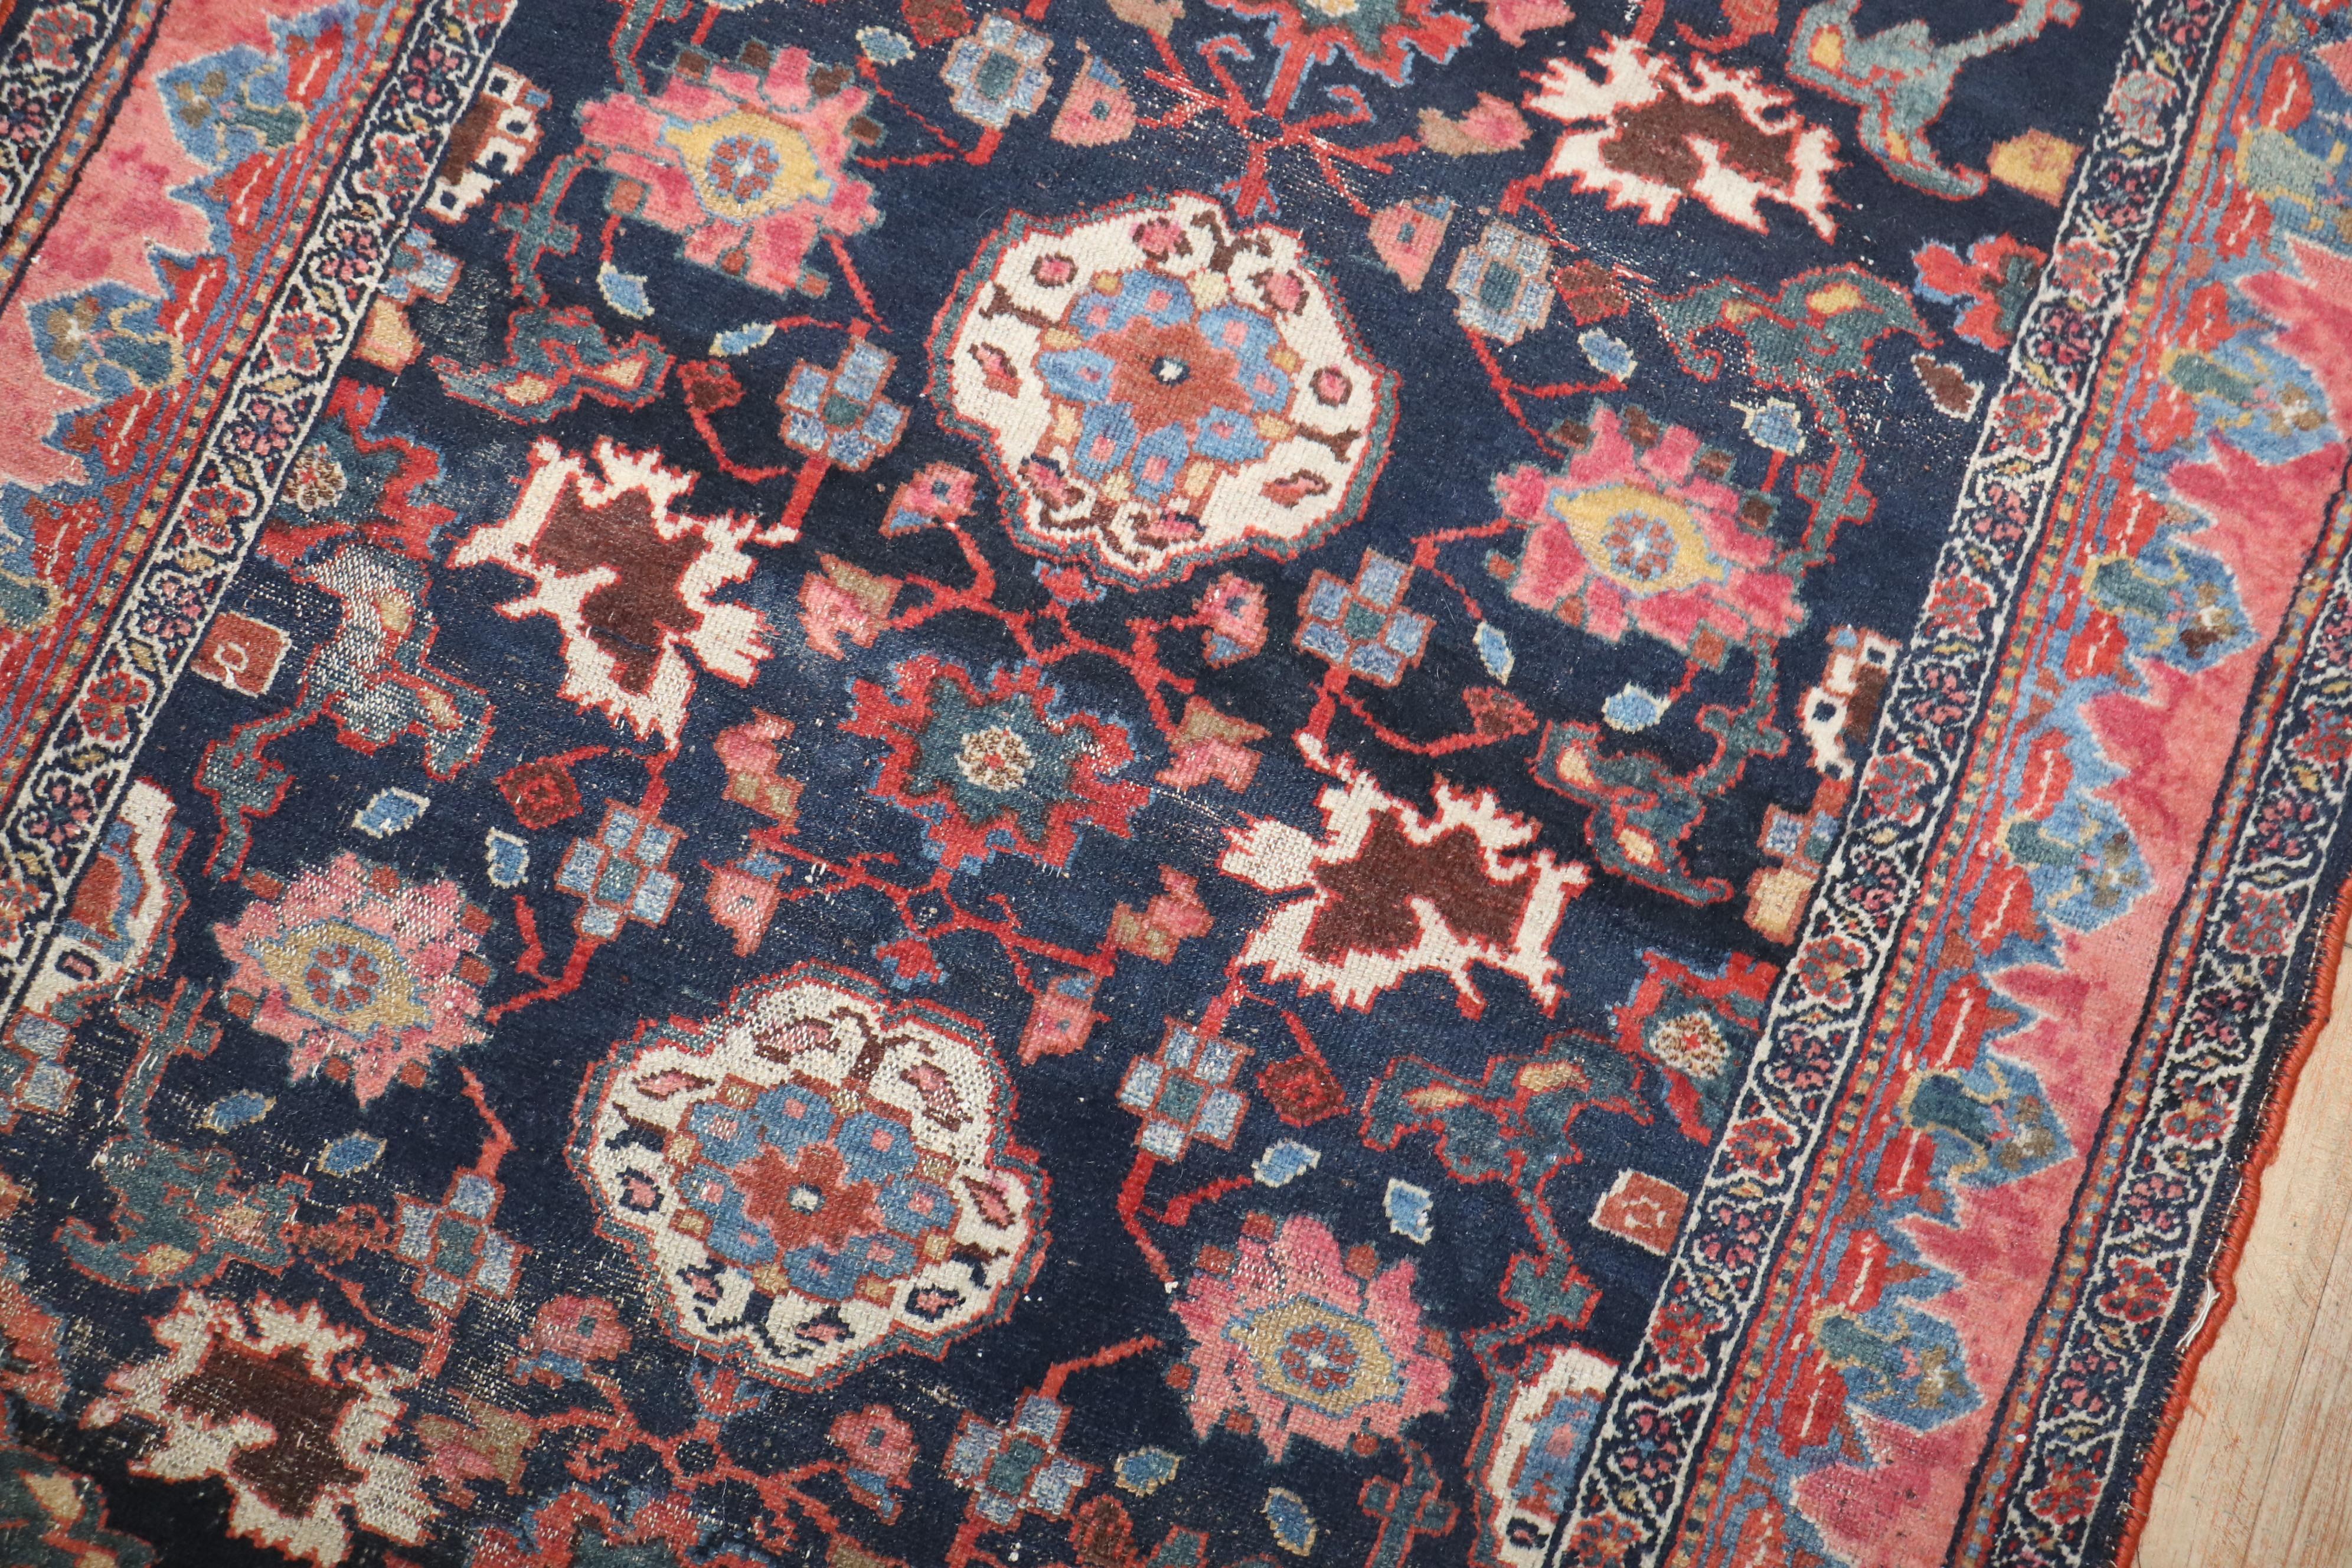 an early 20th century Persian Malayer worn rug

Measure: 4'3'' x 6'1''.